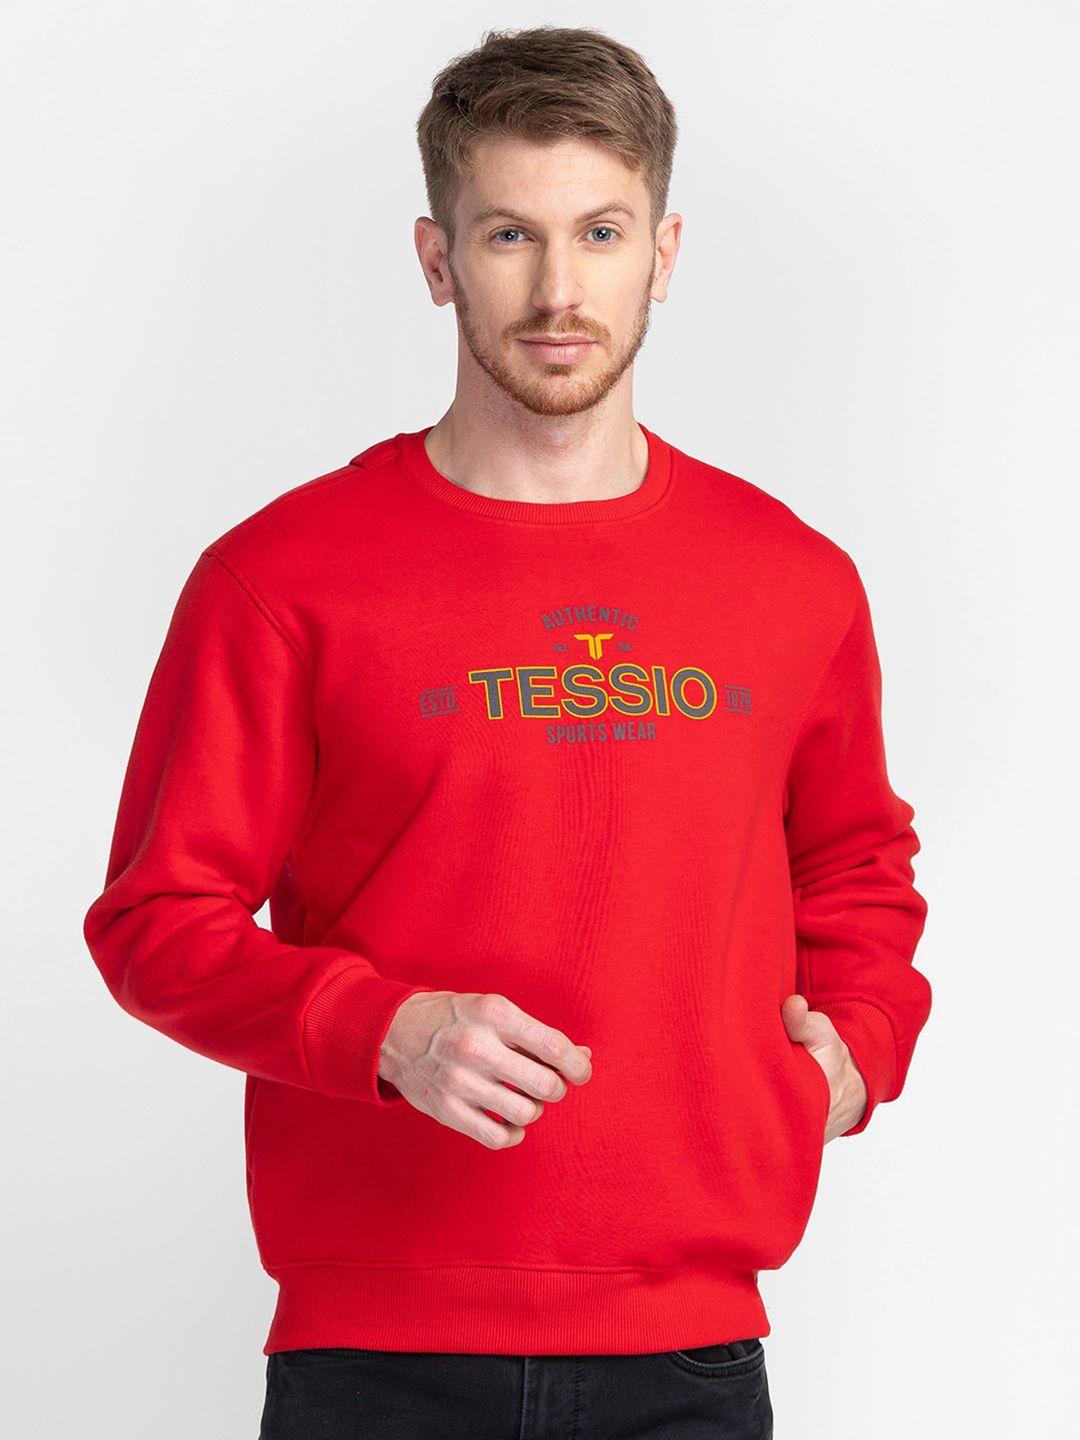 tessio-men-red-printed-sweatshirt